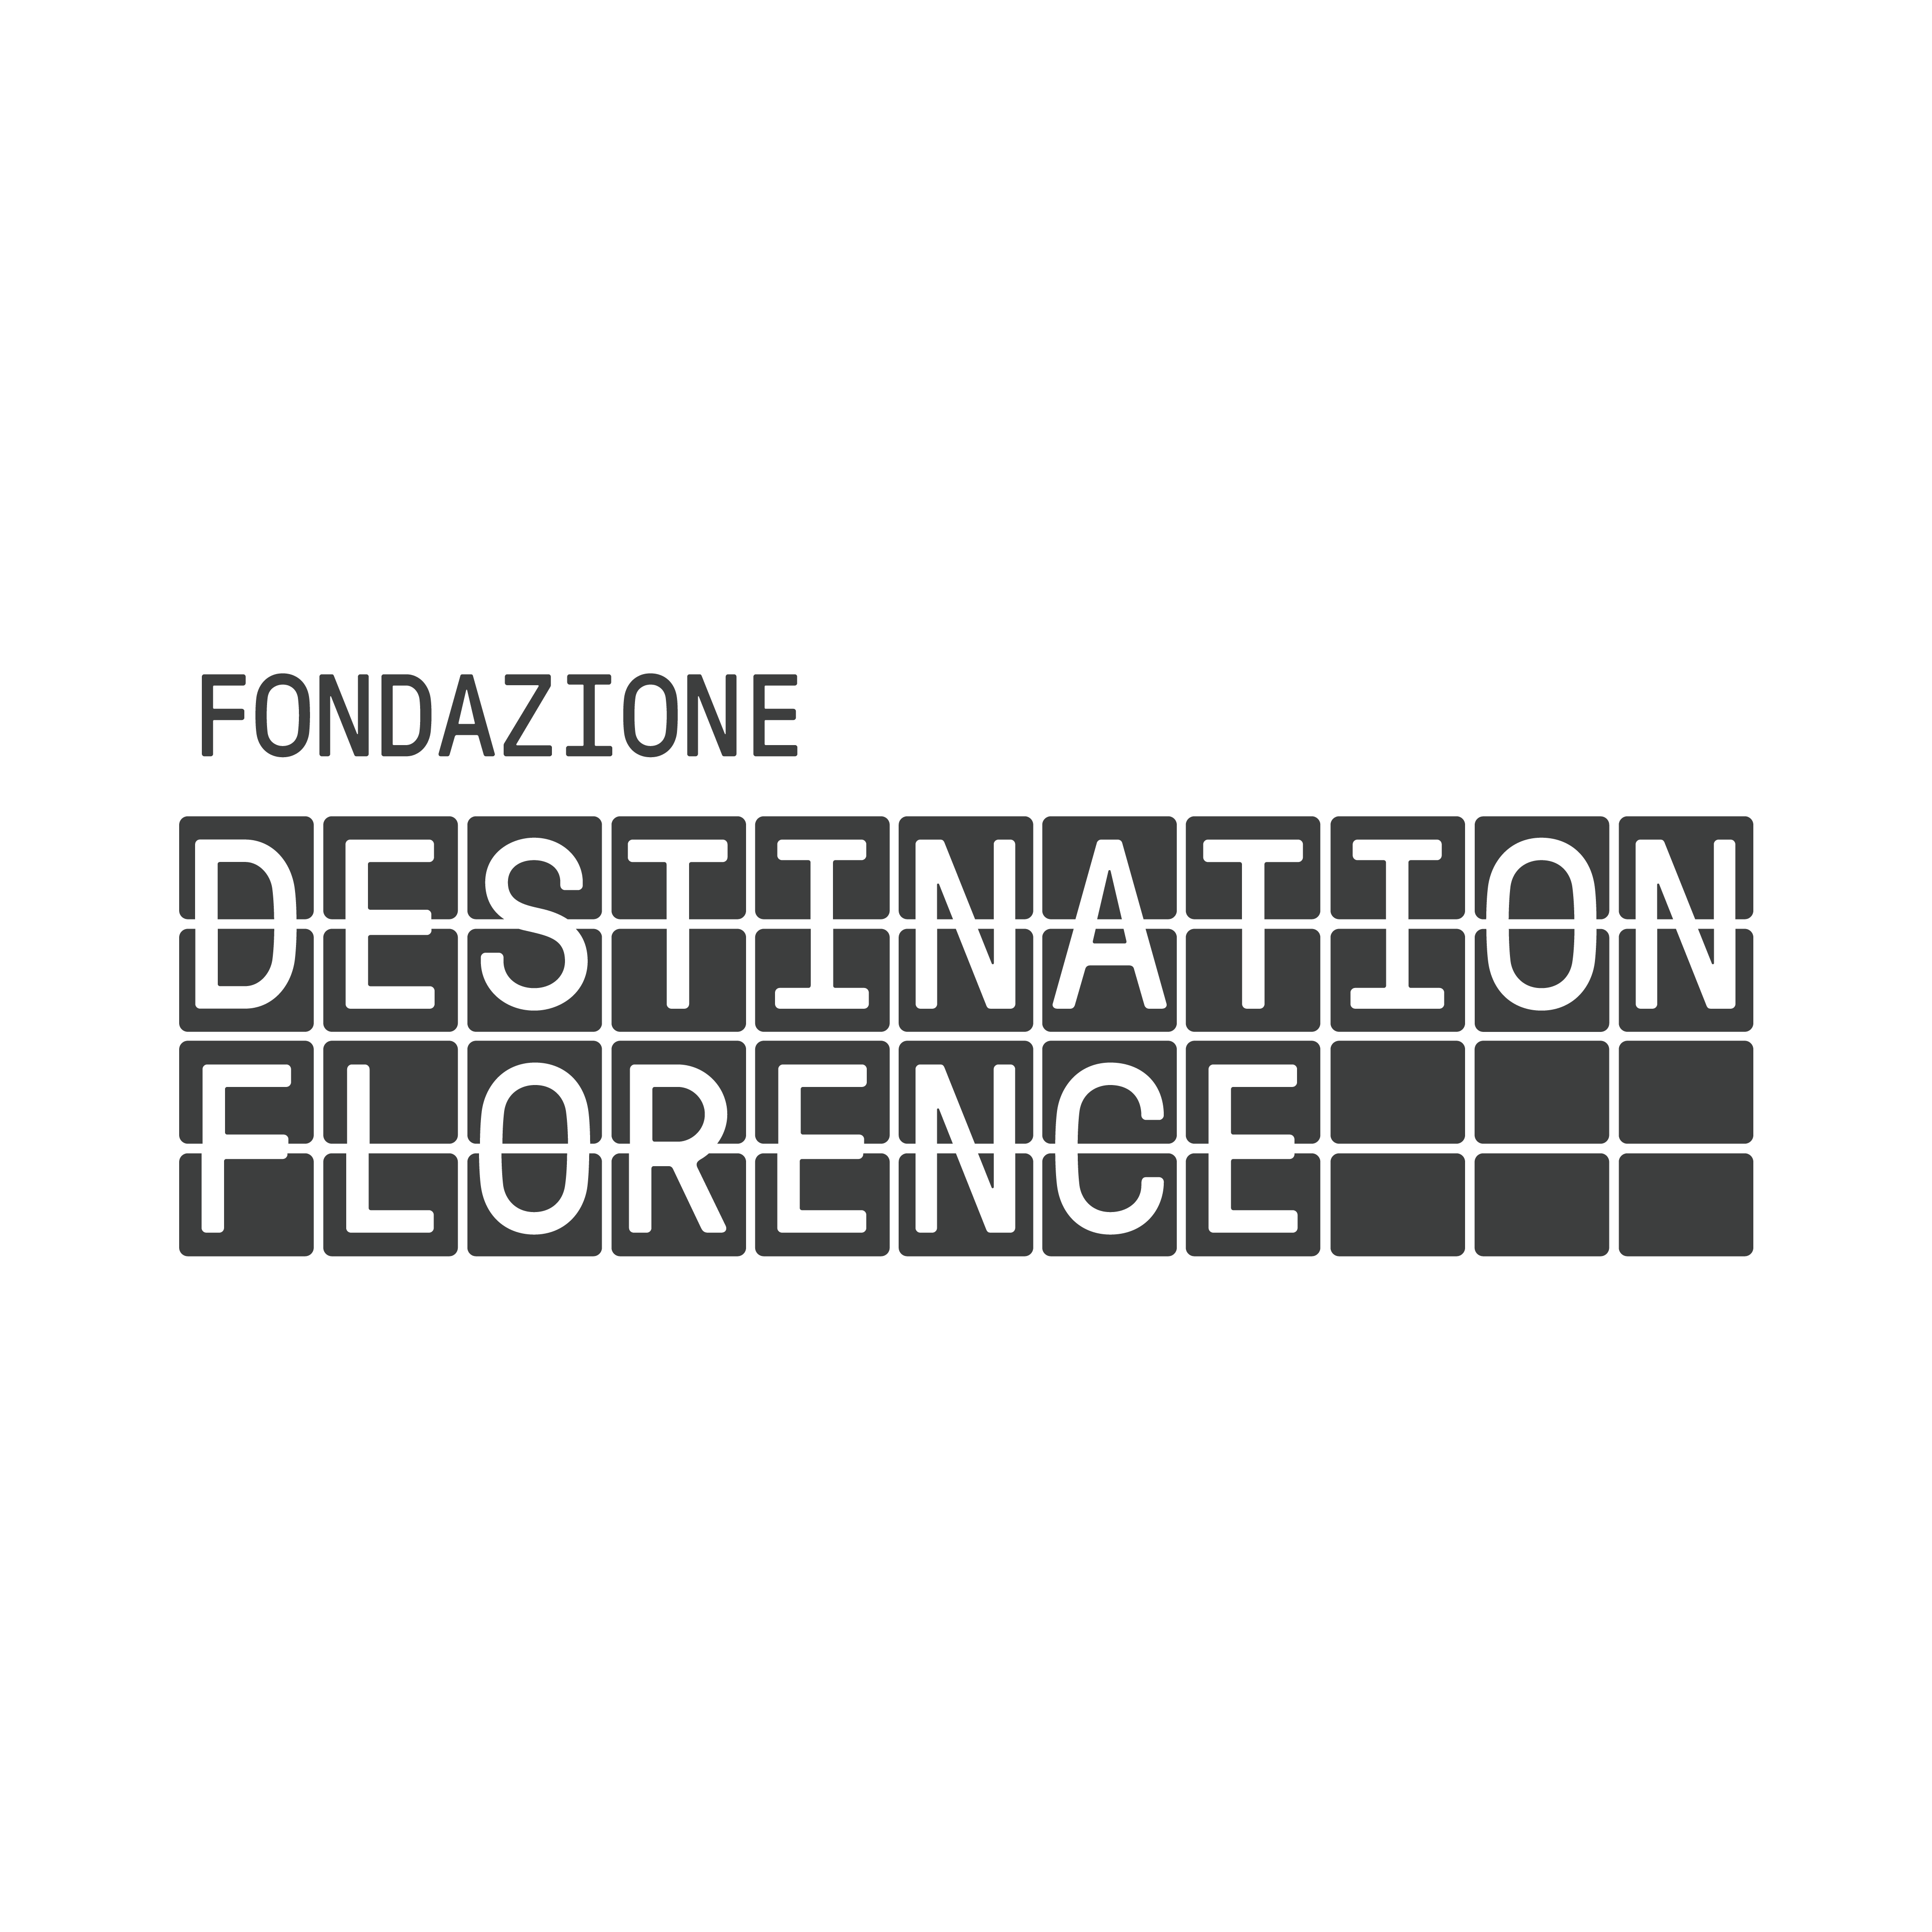 External link to Destination Florence website